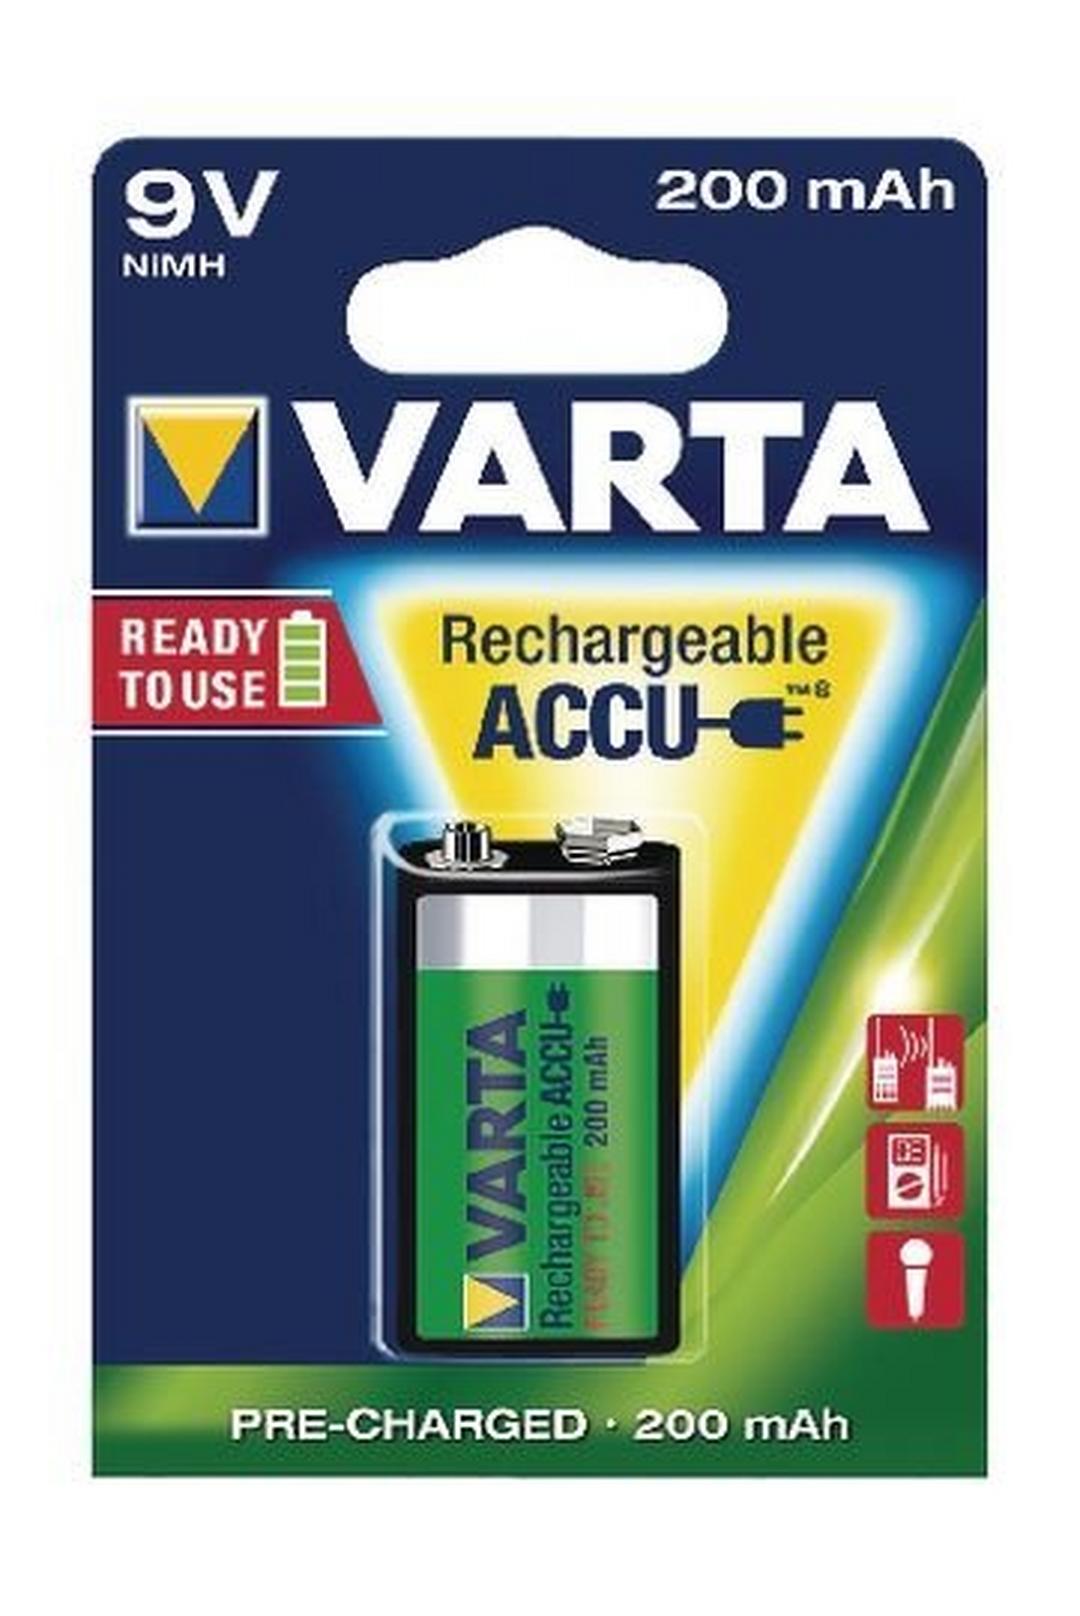 Varta Rechargeable ACCU 1X 9V Nickel-Metal Battery 200 mAh